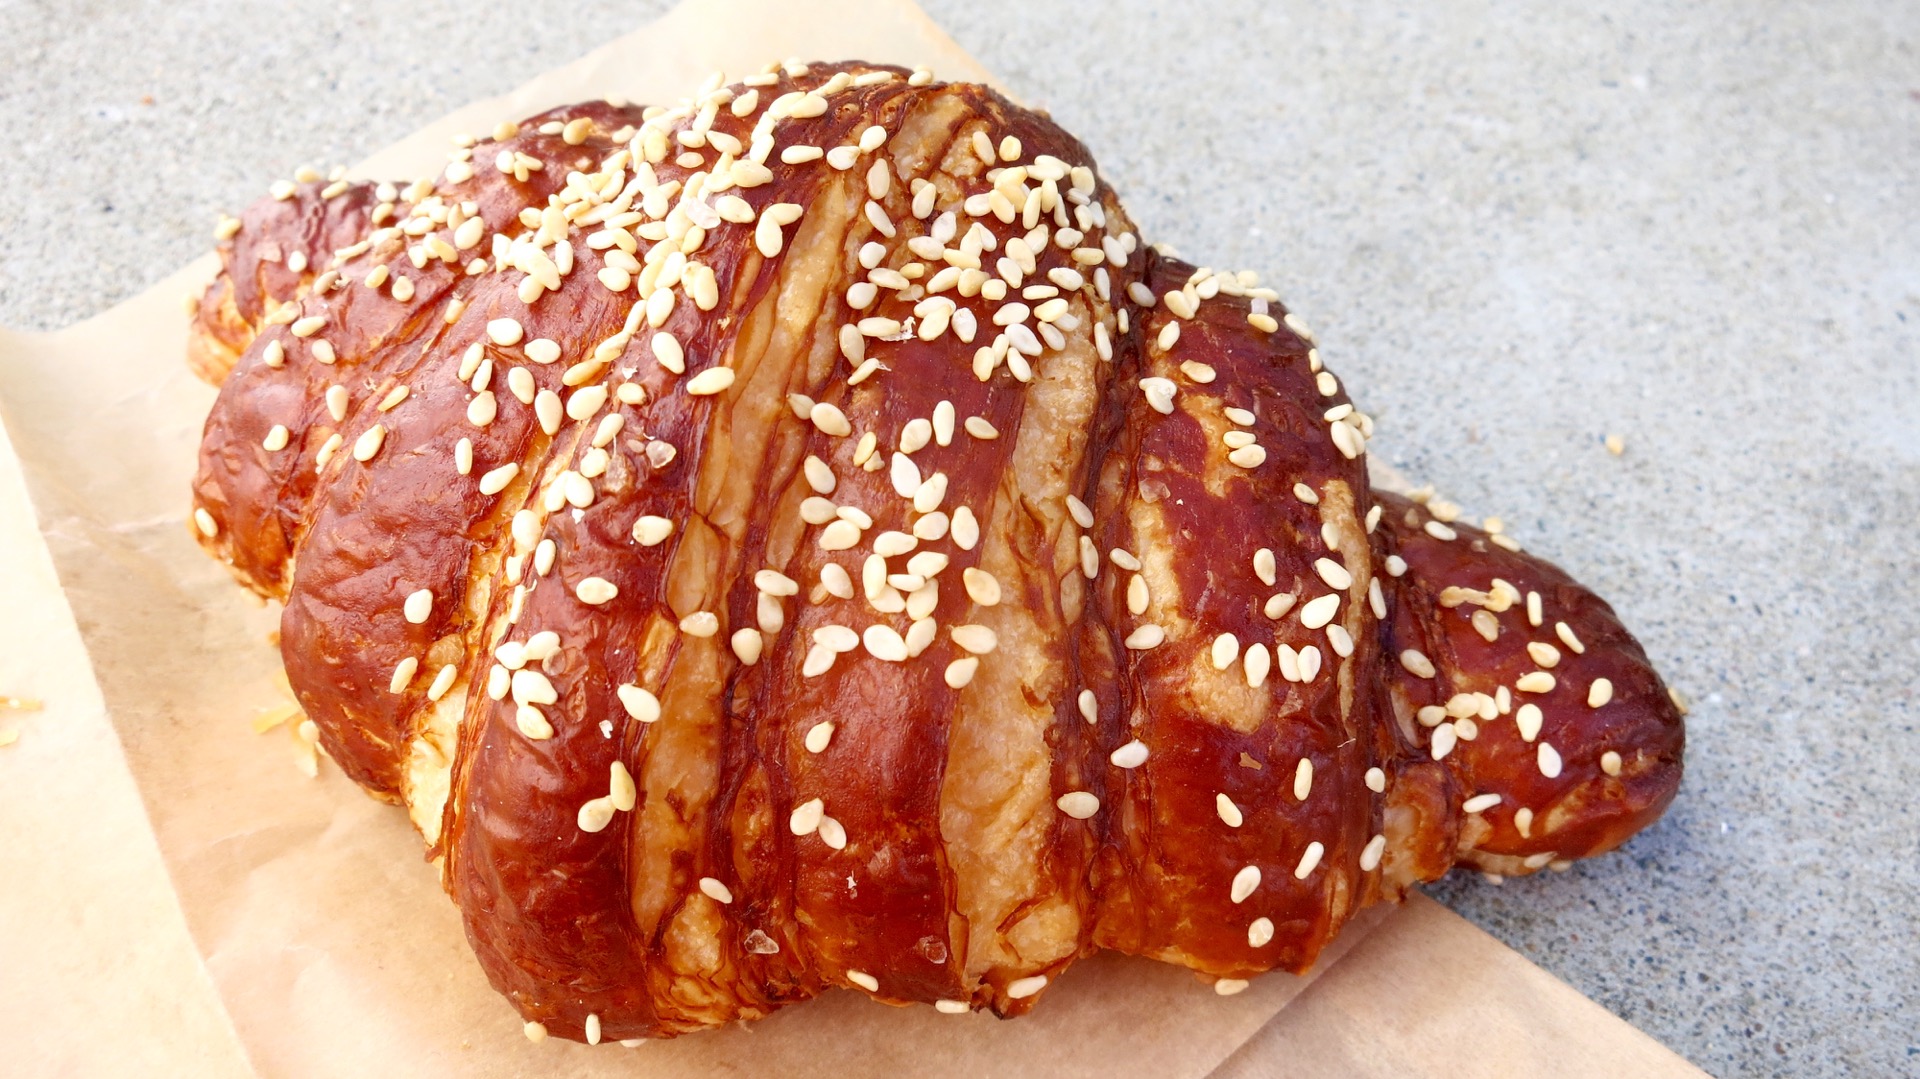 Starter Bakery's pretzel croissant marries the best flavors of both foods.